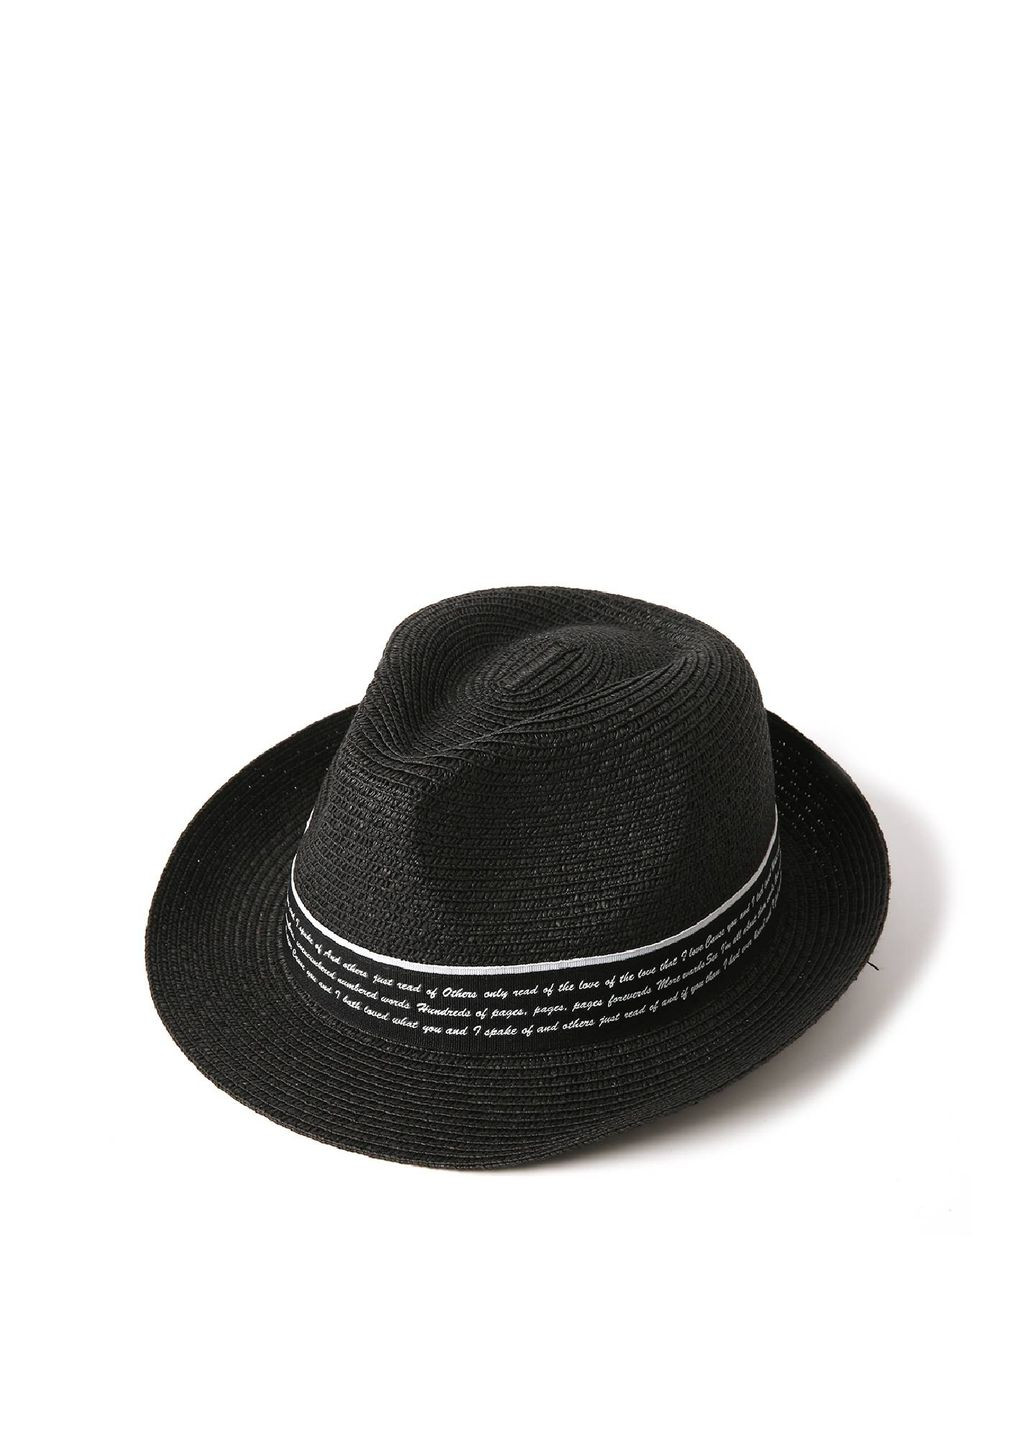 Шляпа трилби мужская бумага черная VALERY 817-716 LuckyLOOK 817-716m (290186938)